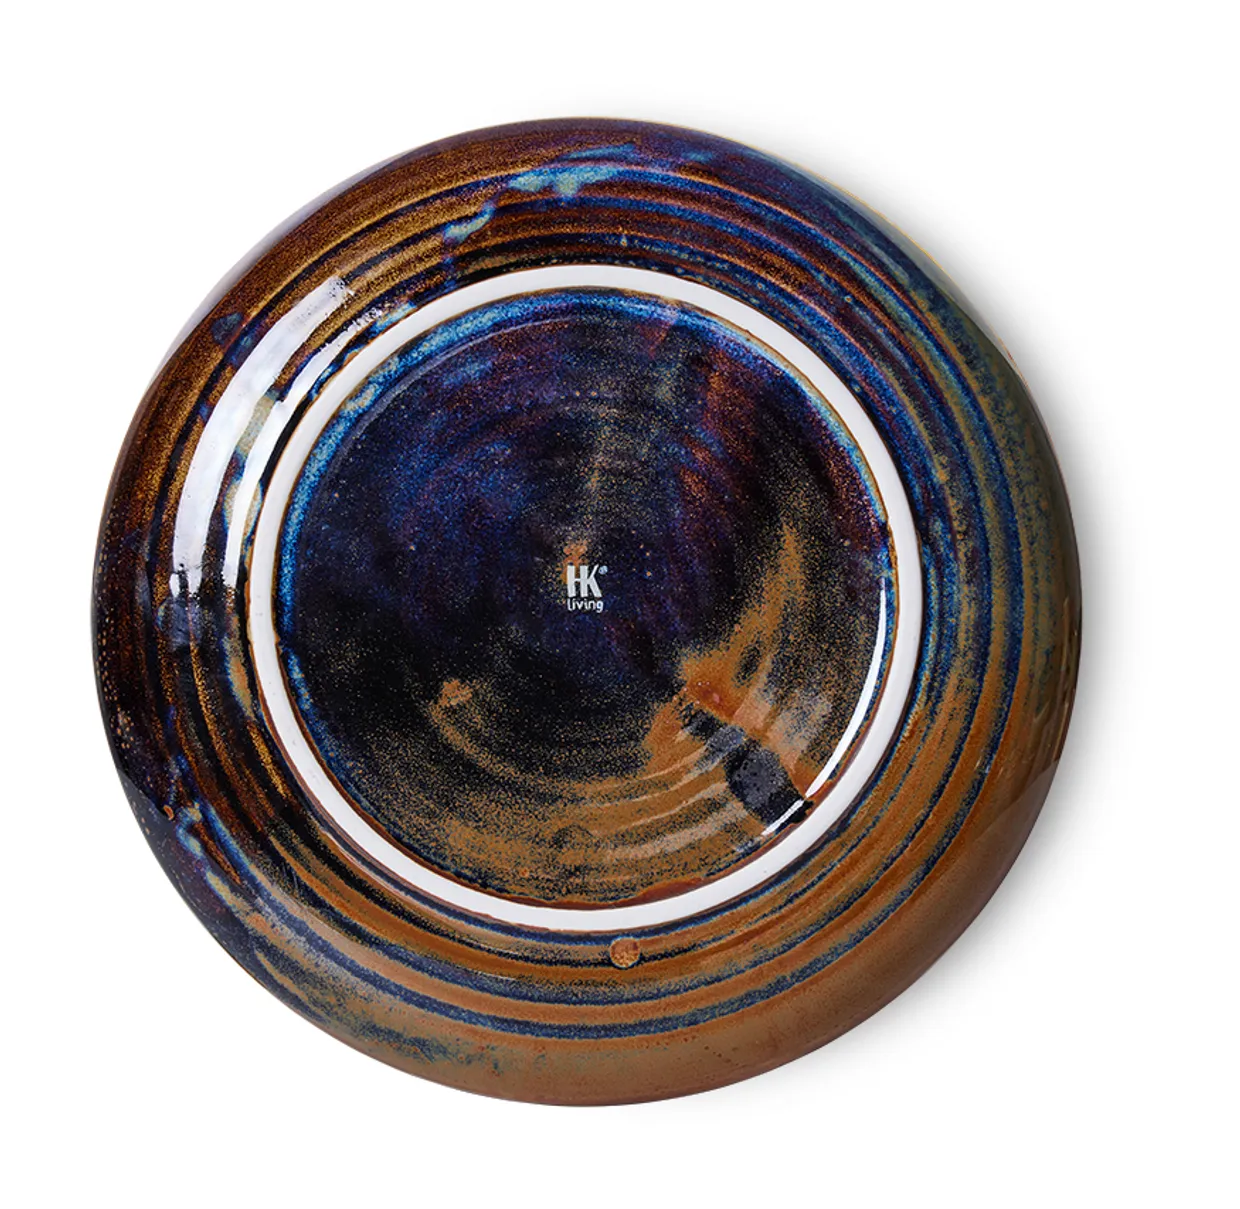 Chef ceramics: side plate, rustic blue